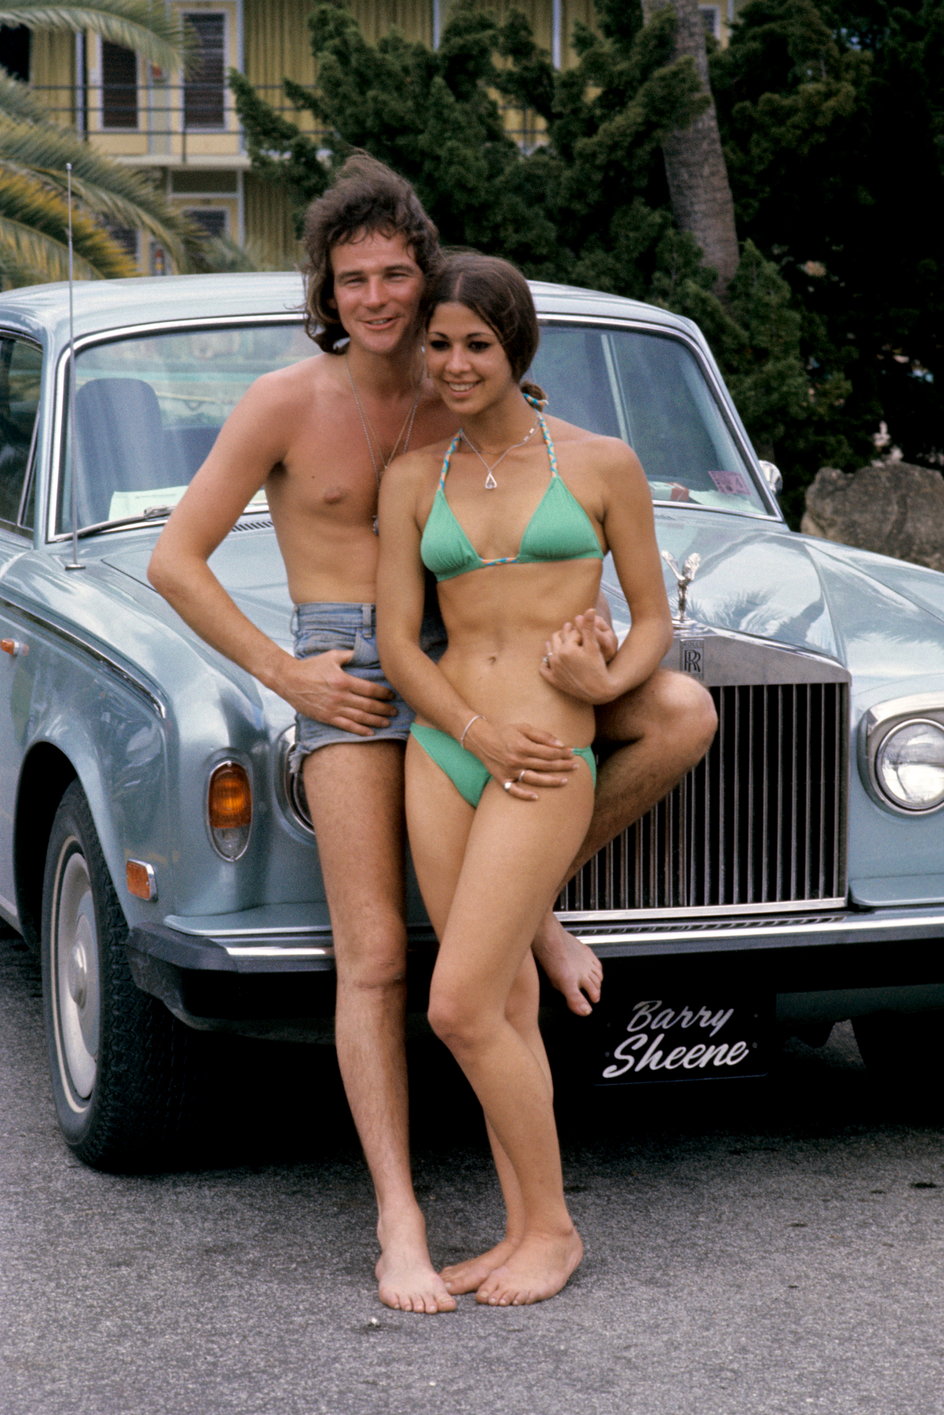 Barry Sheene z jedną ze swoich partnerek pozuje na tle Rolls Royce'a